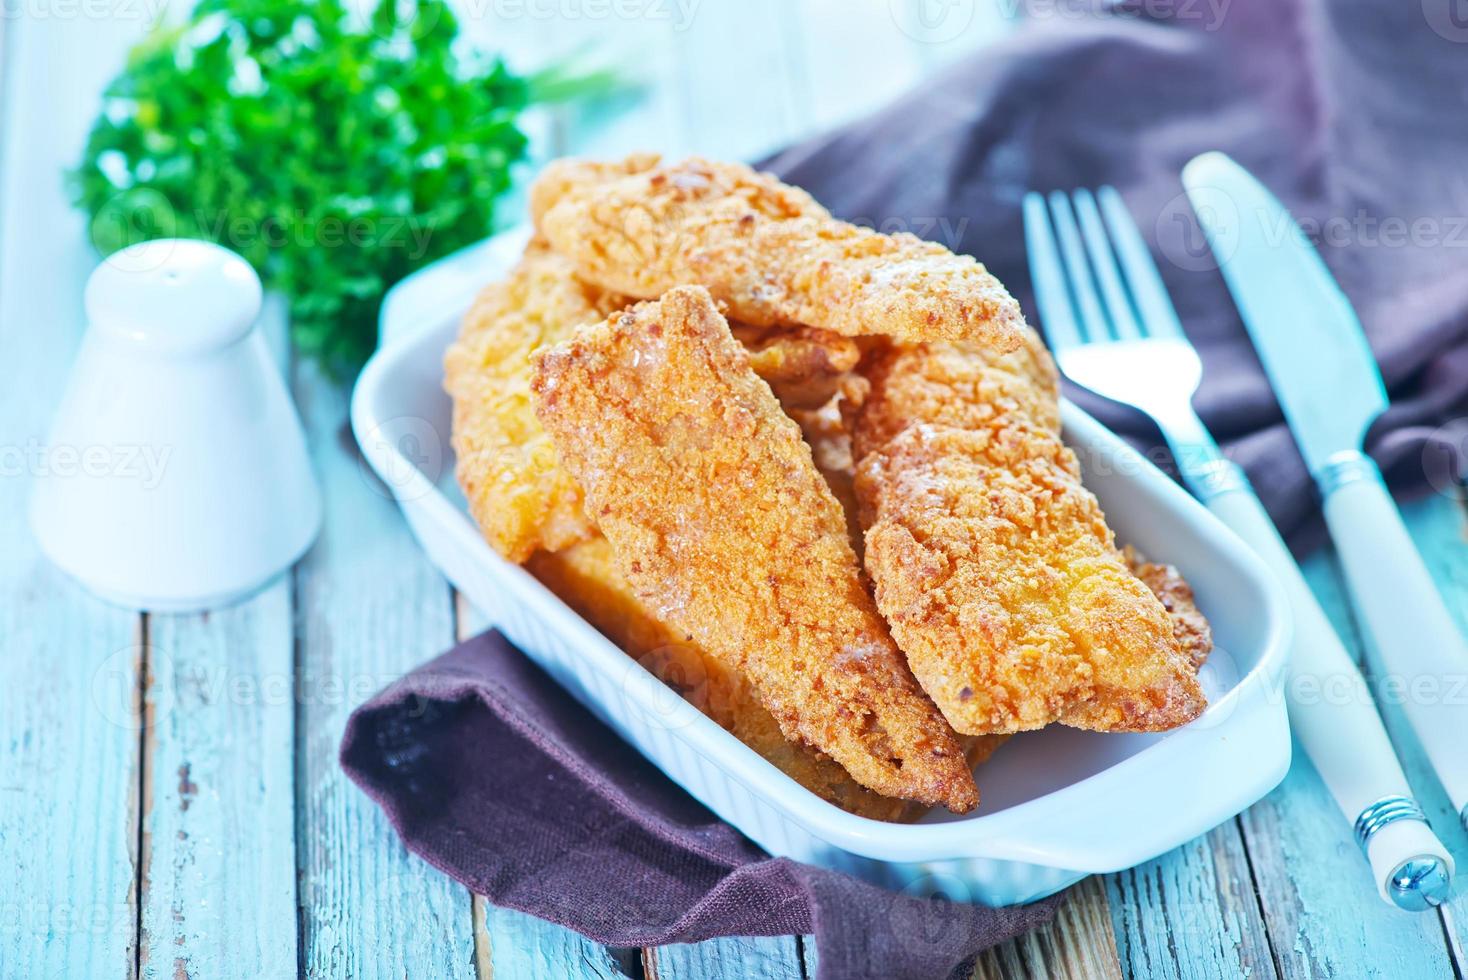 fried fish photo